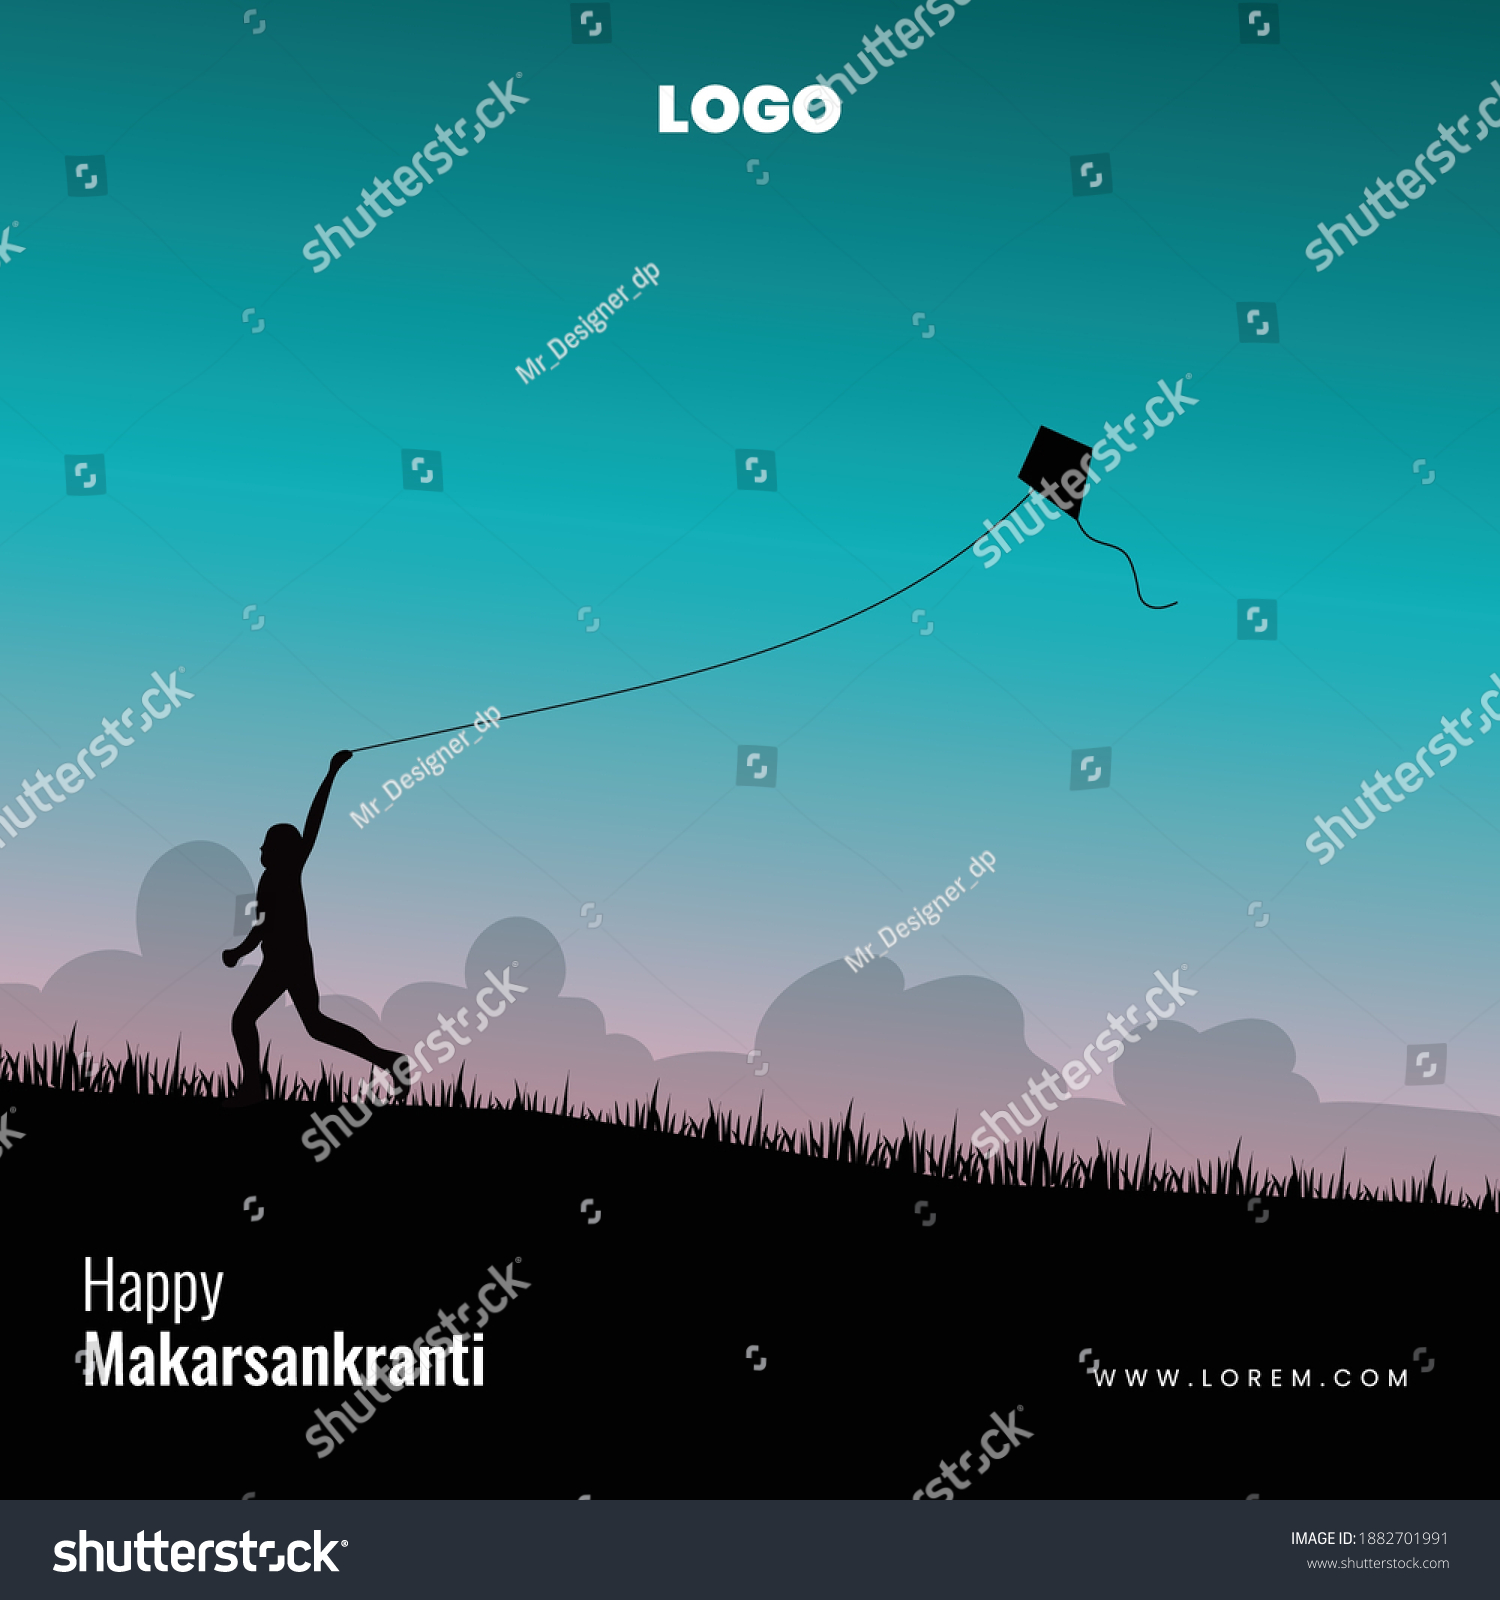 SVG of Happy Makar Sankranti Concept with boy flying kite. Silhouette of boy flying kite. svg